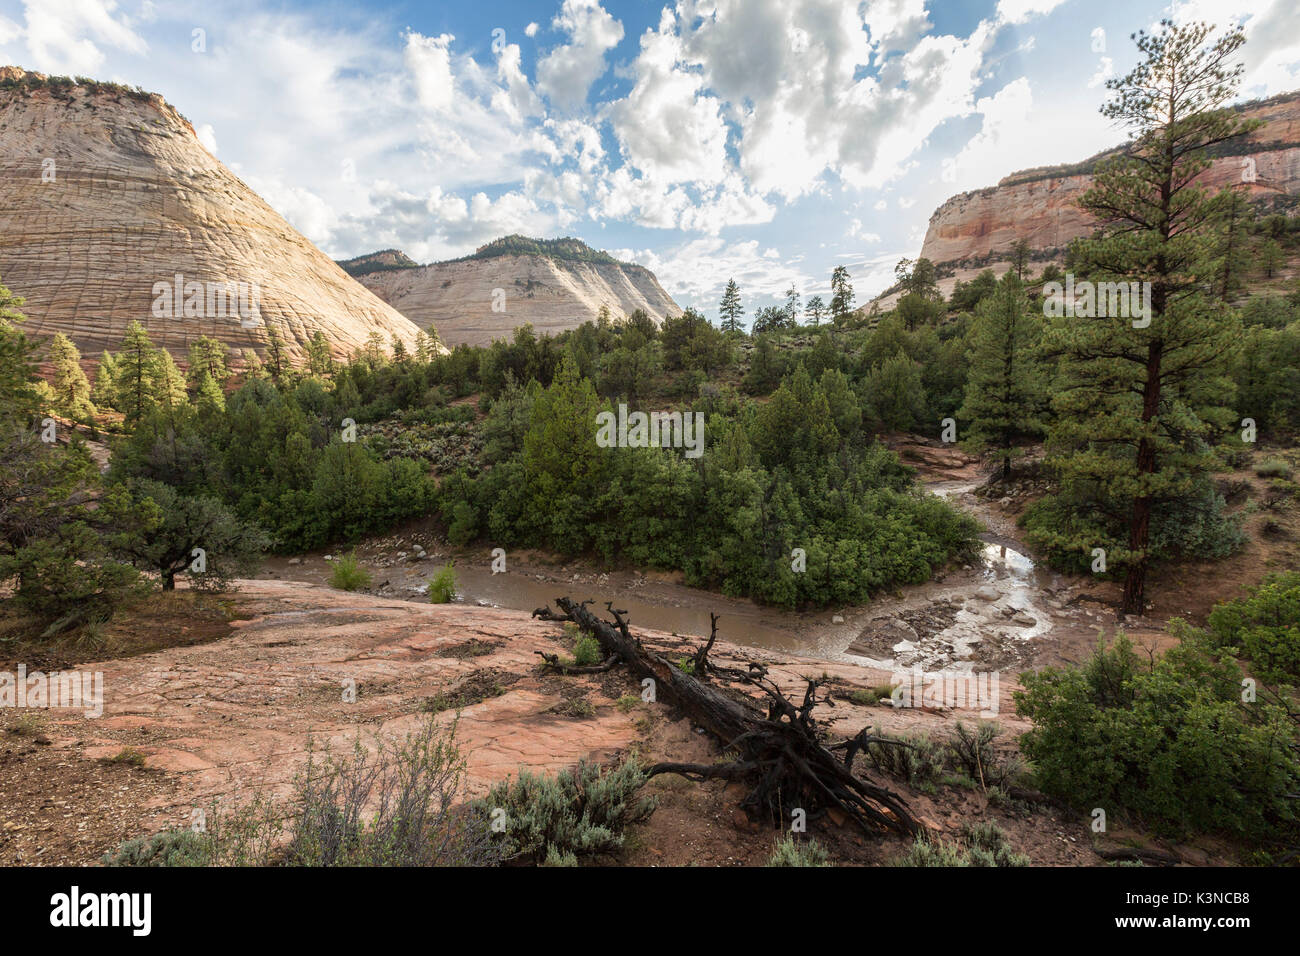 Landscape from Zion Canyon Scenic Drive. Zion National Park, Hurricane, Washington County, Utah, USA. Stock Photo